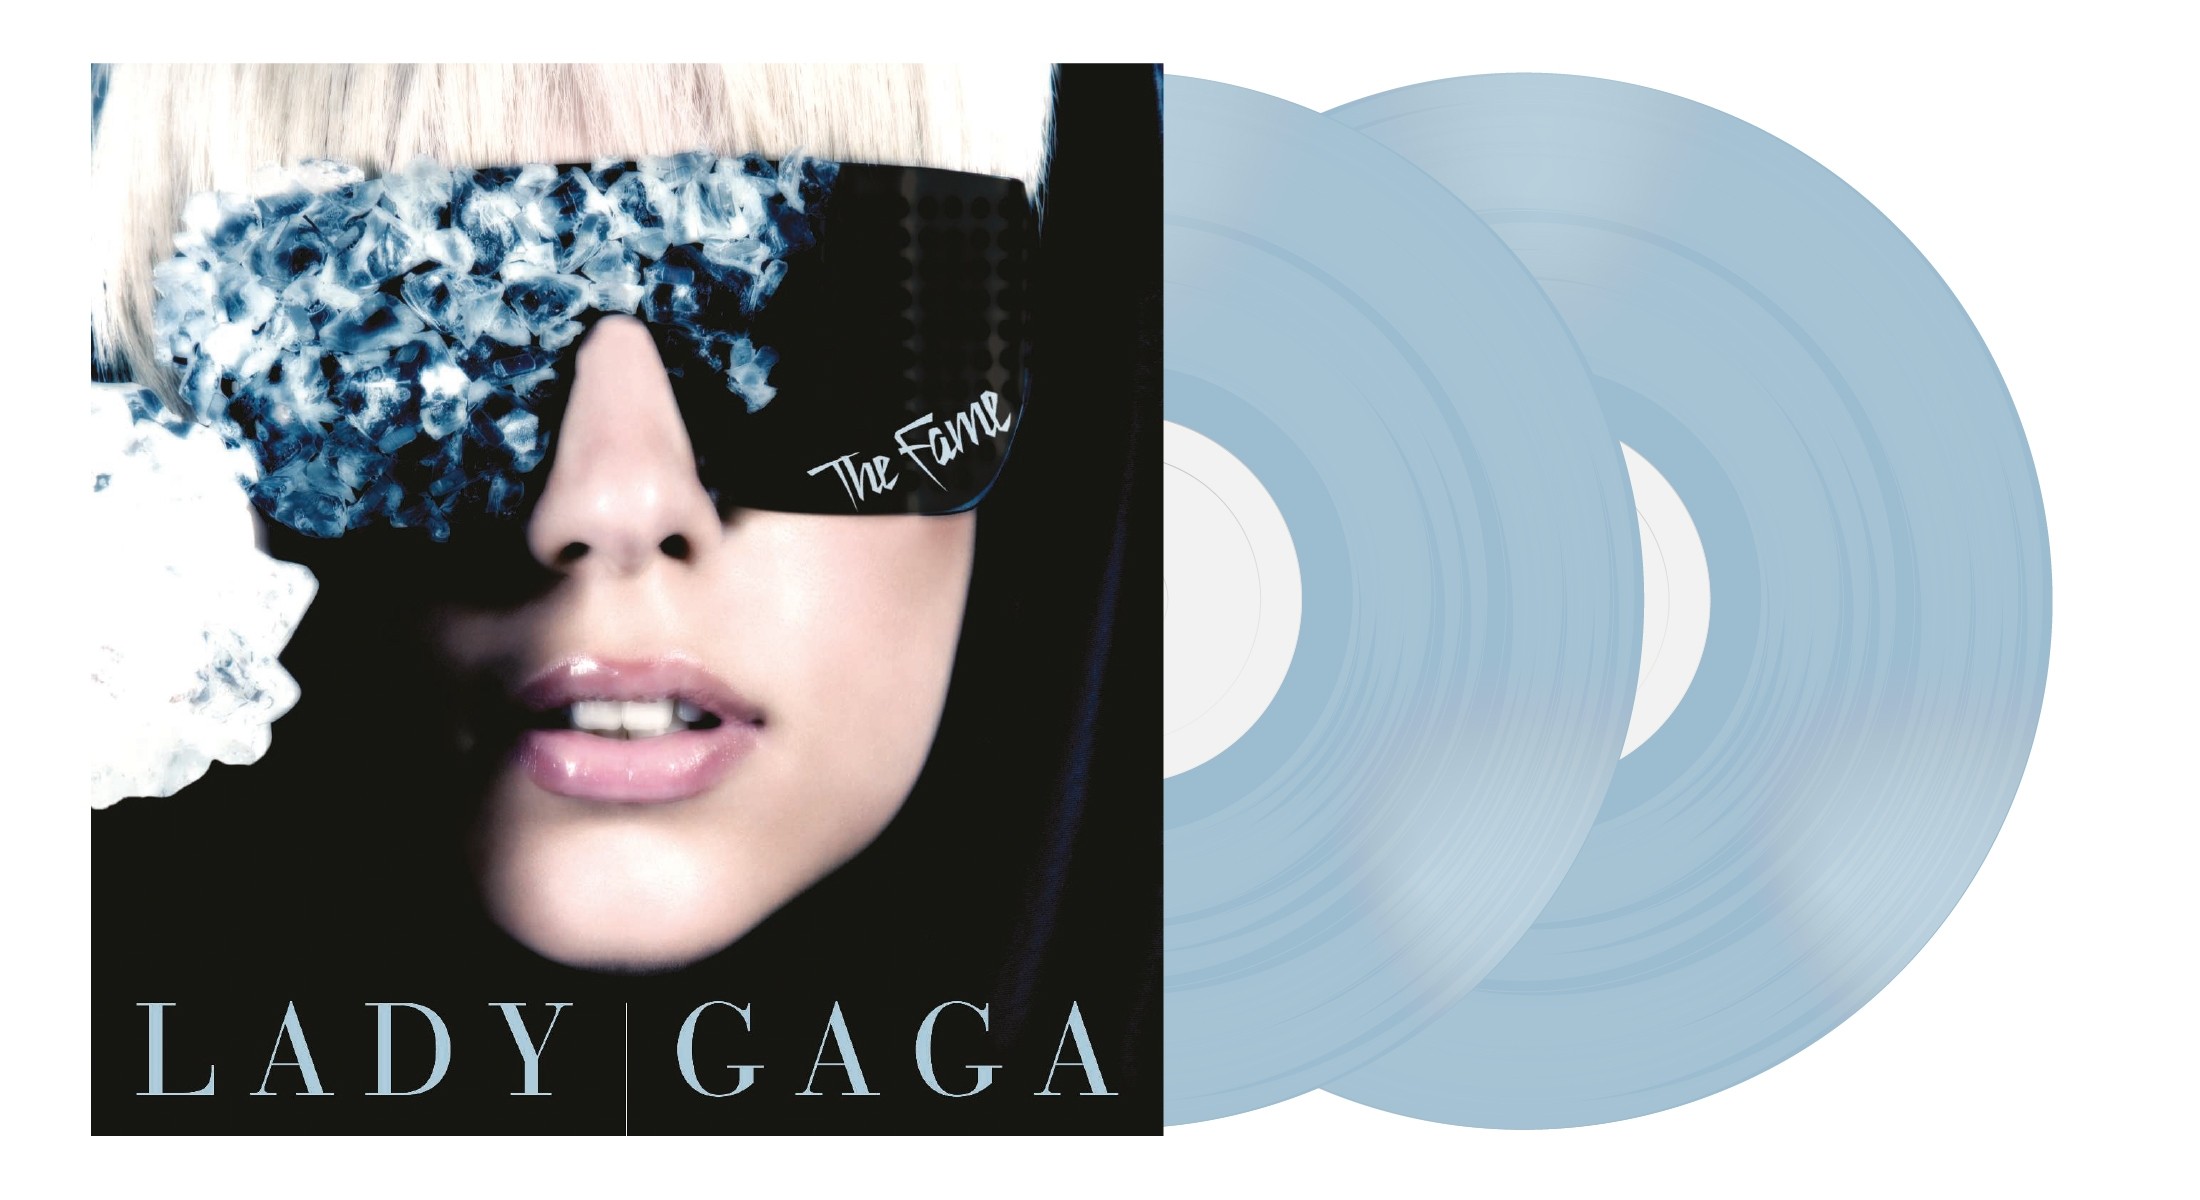 Lady Gaga - The Fame (Blue) 2XLP